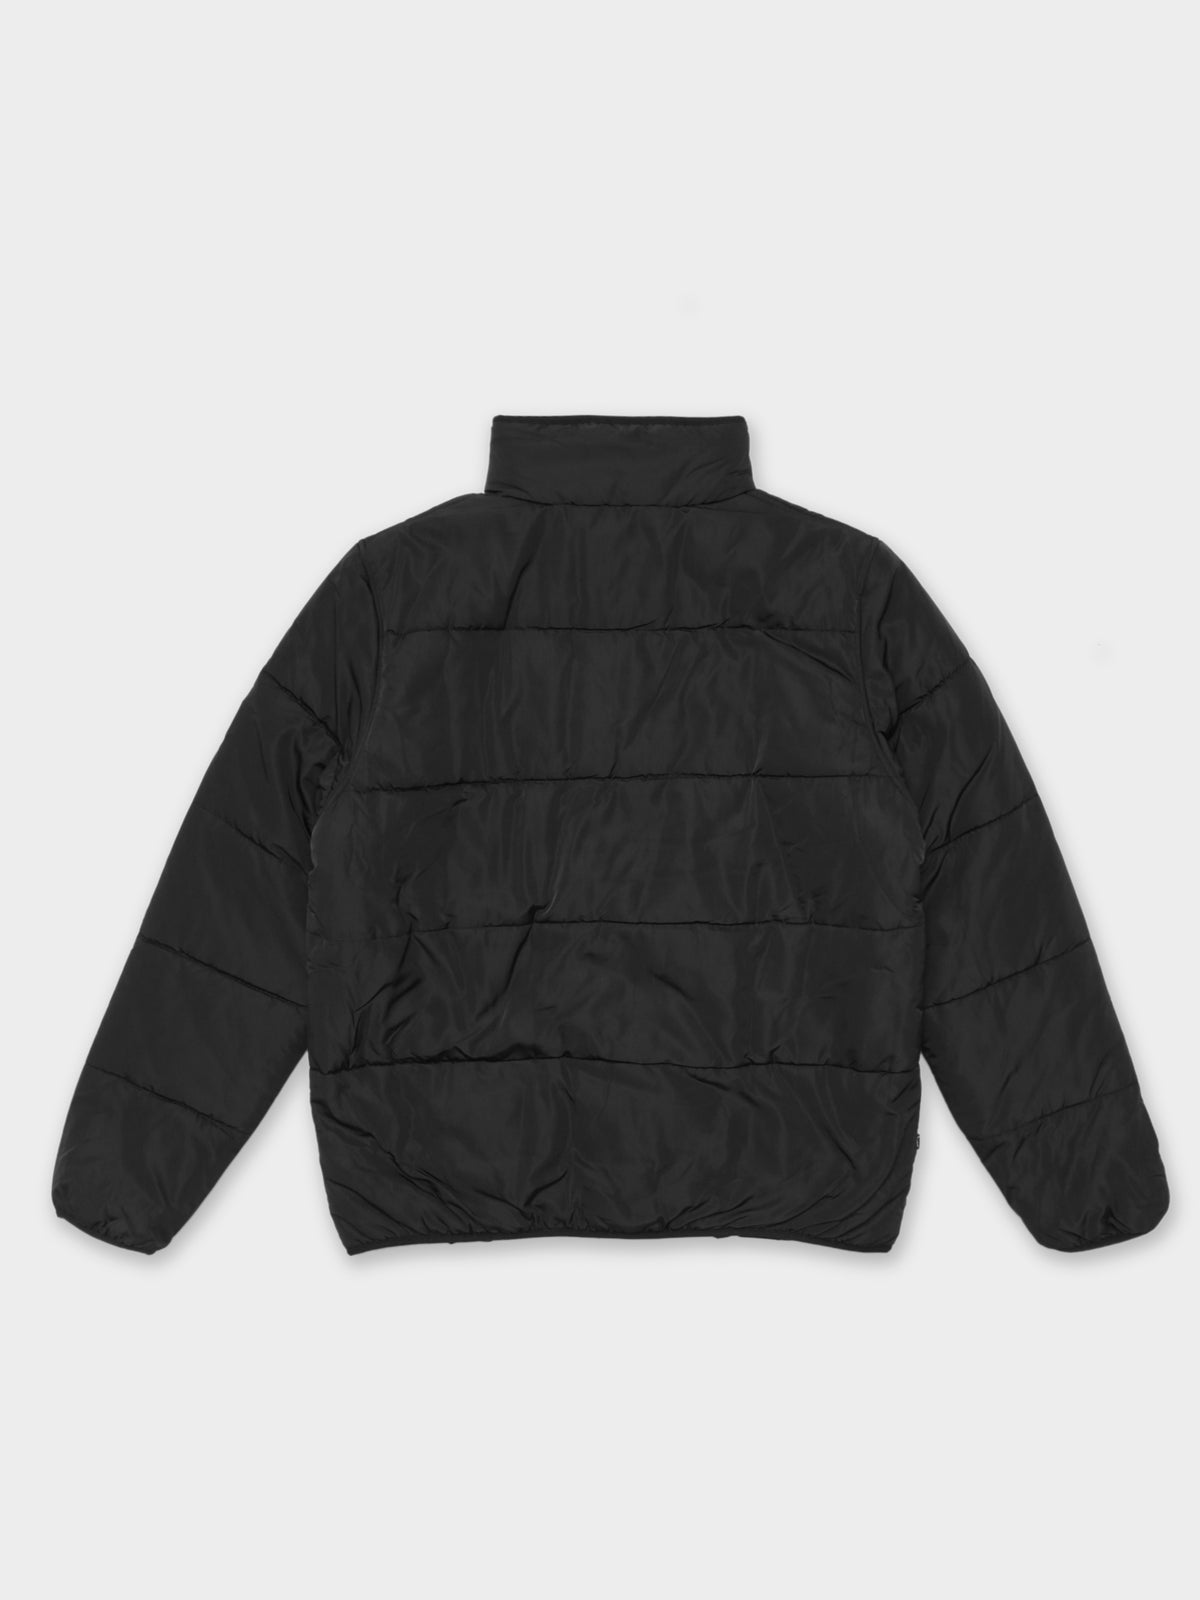 Lightweight Collared Puffer Jacket in Black